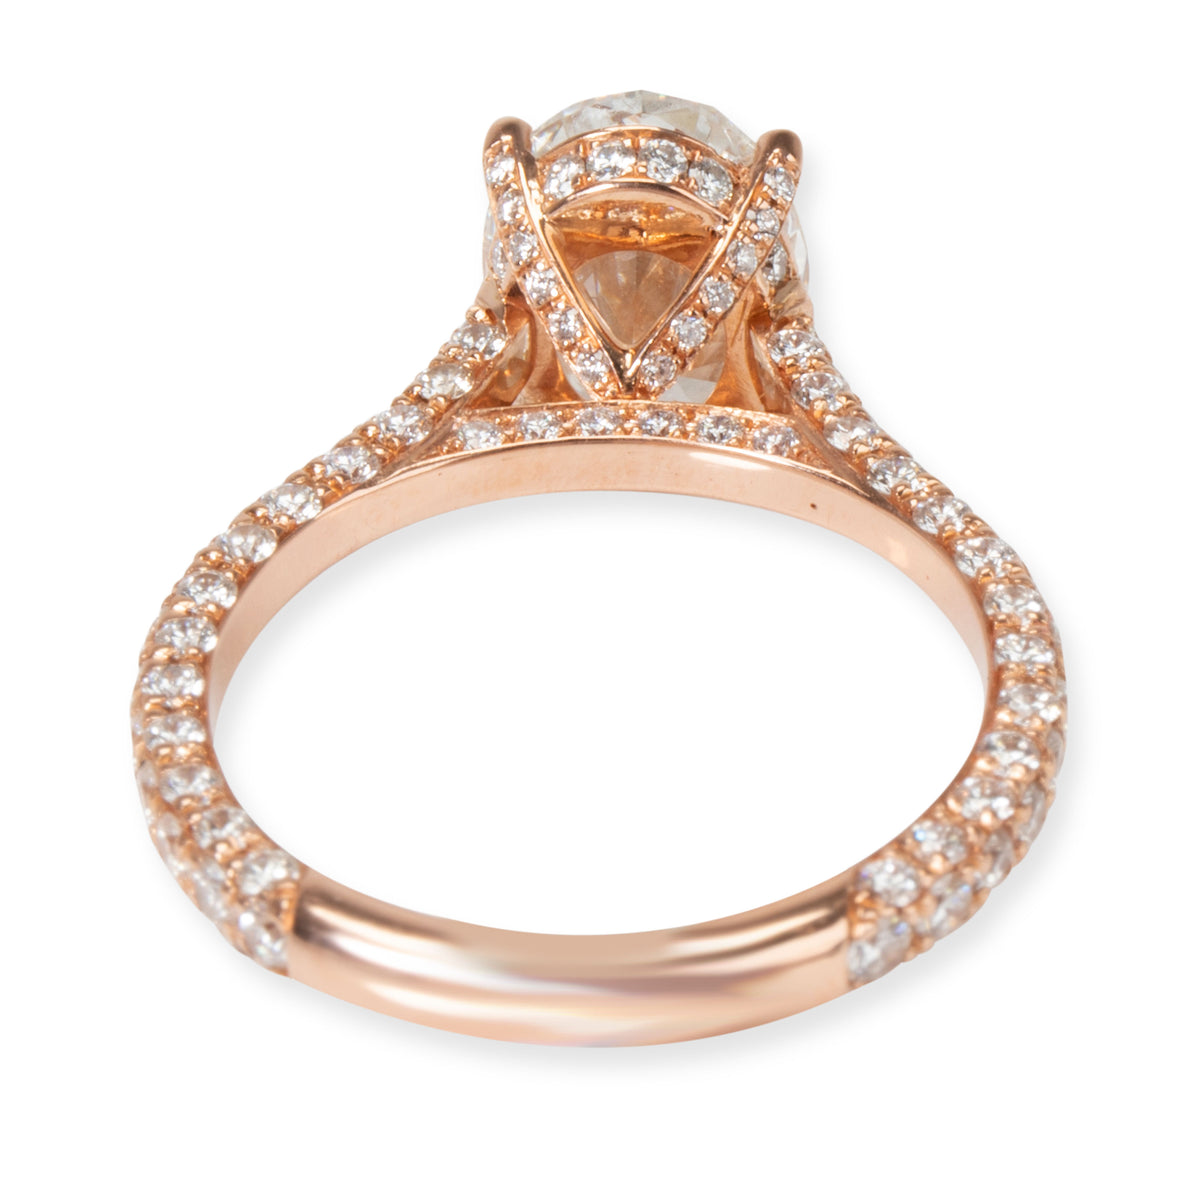 IGI Certified Halo Diamond Engagement Ring in 18K Rose Gold G SI1 2.76 CTW